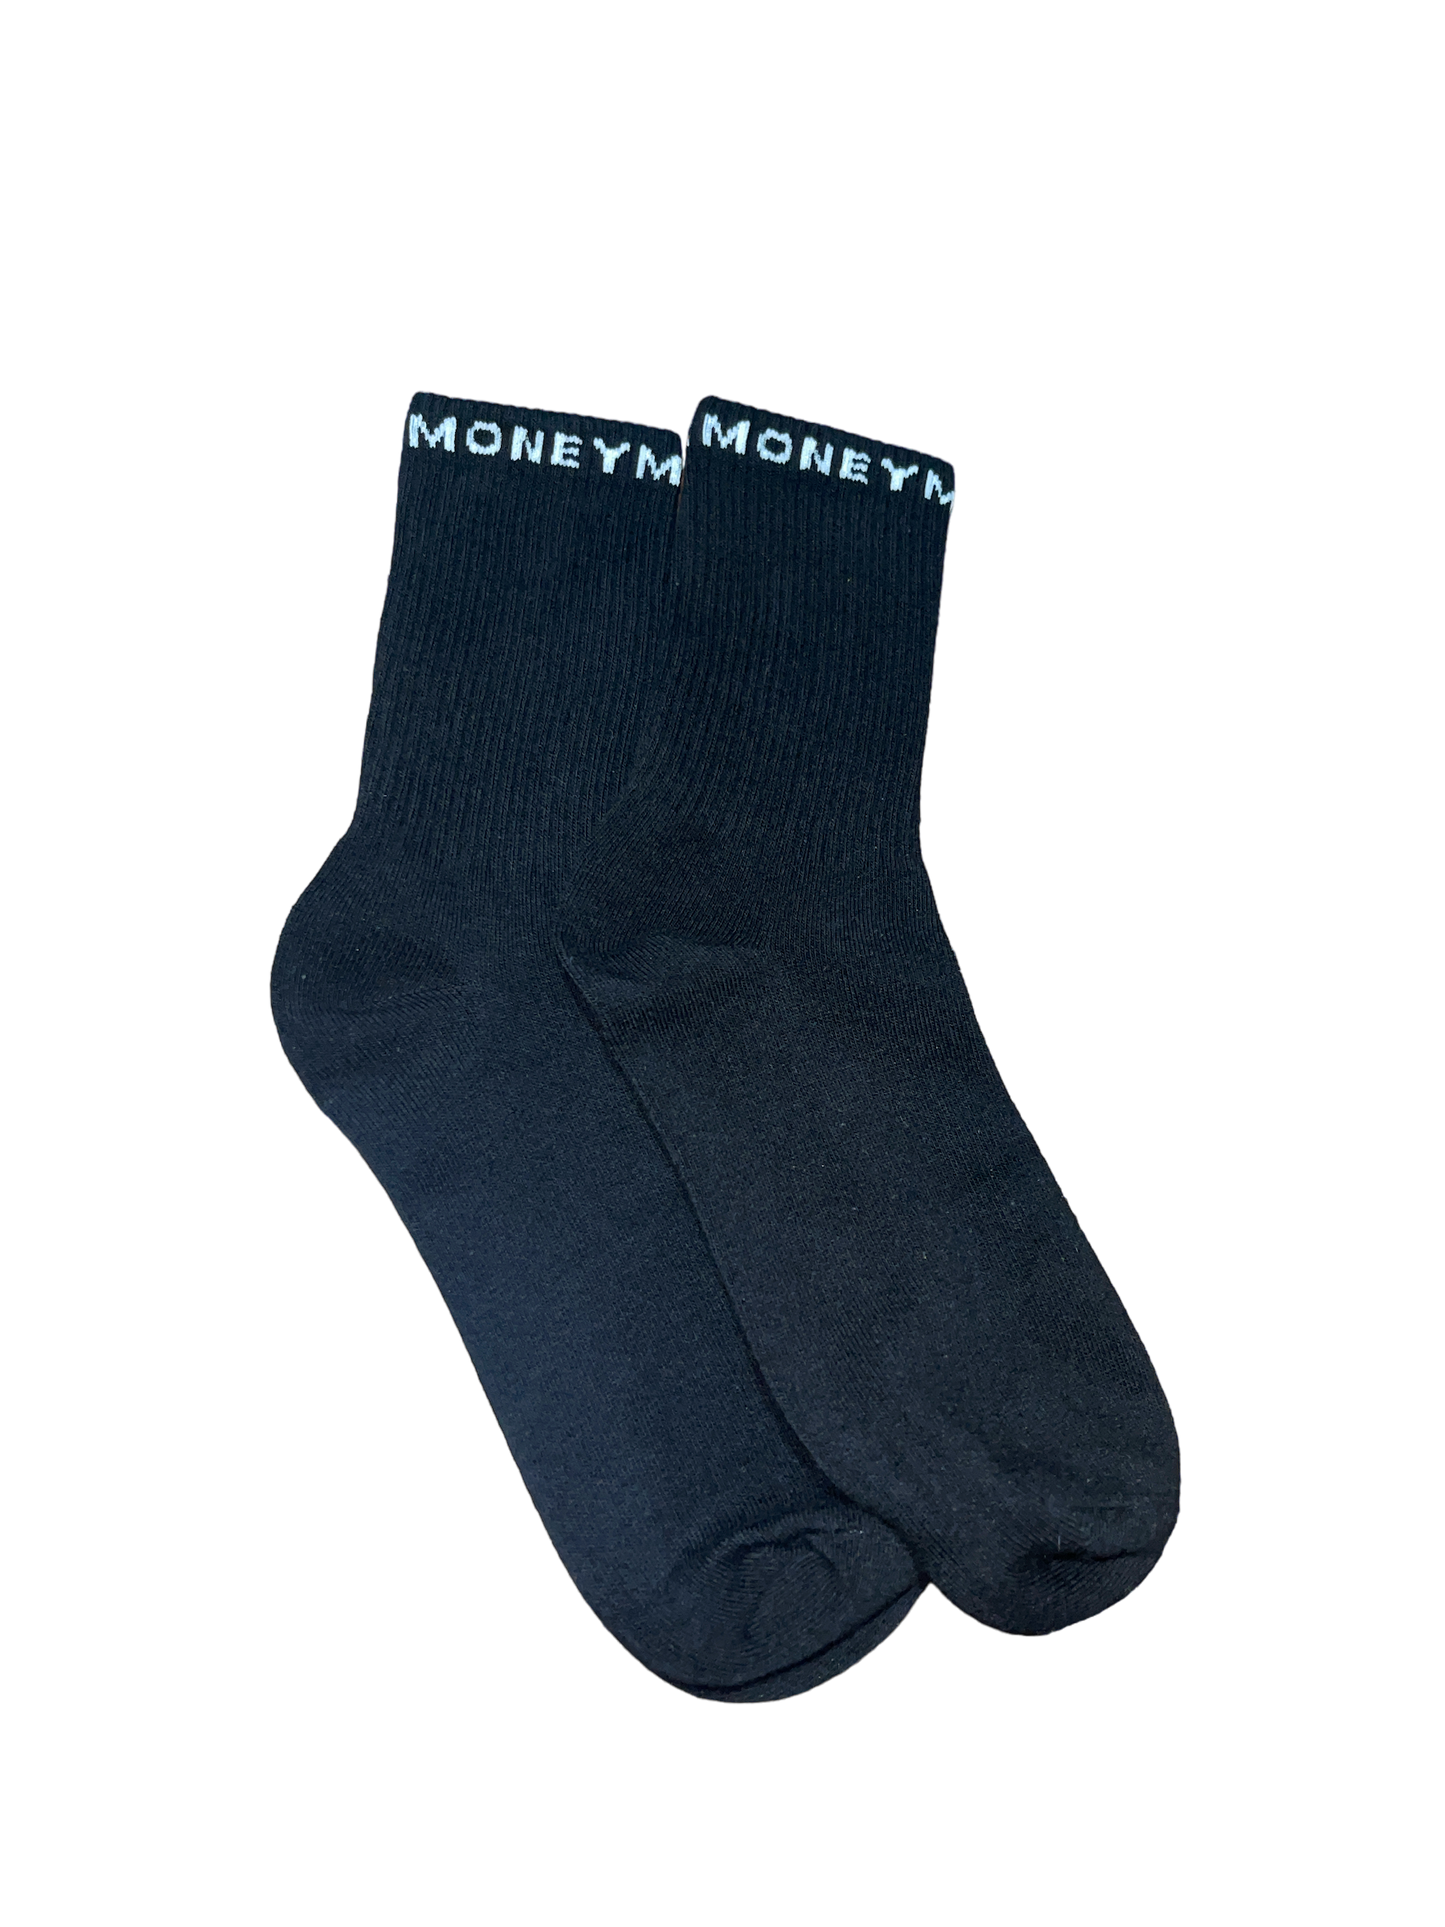 “MONEY MAN CLUB $” SOCKS